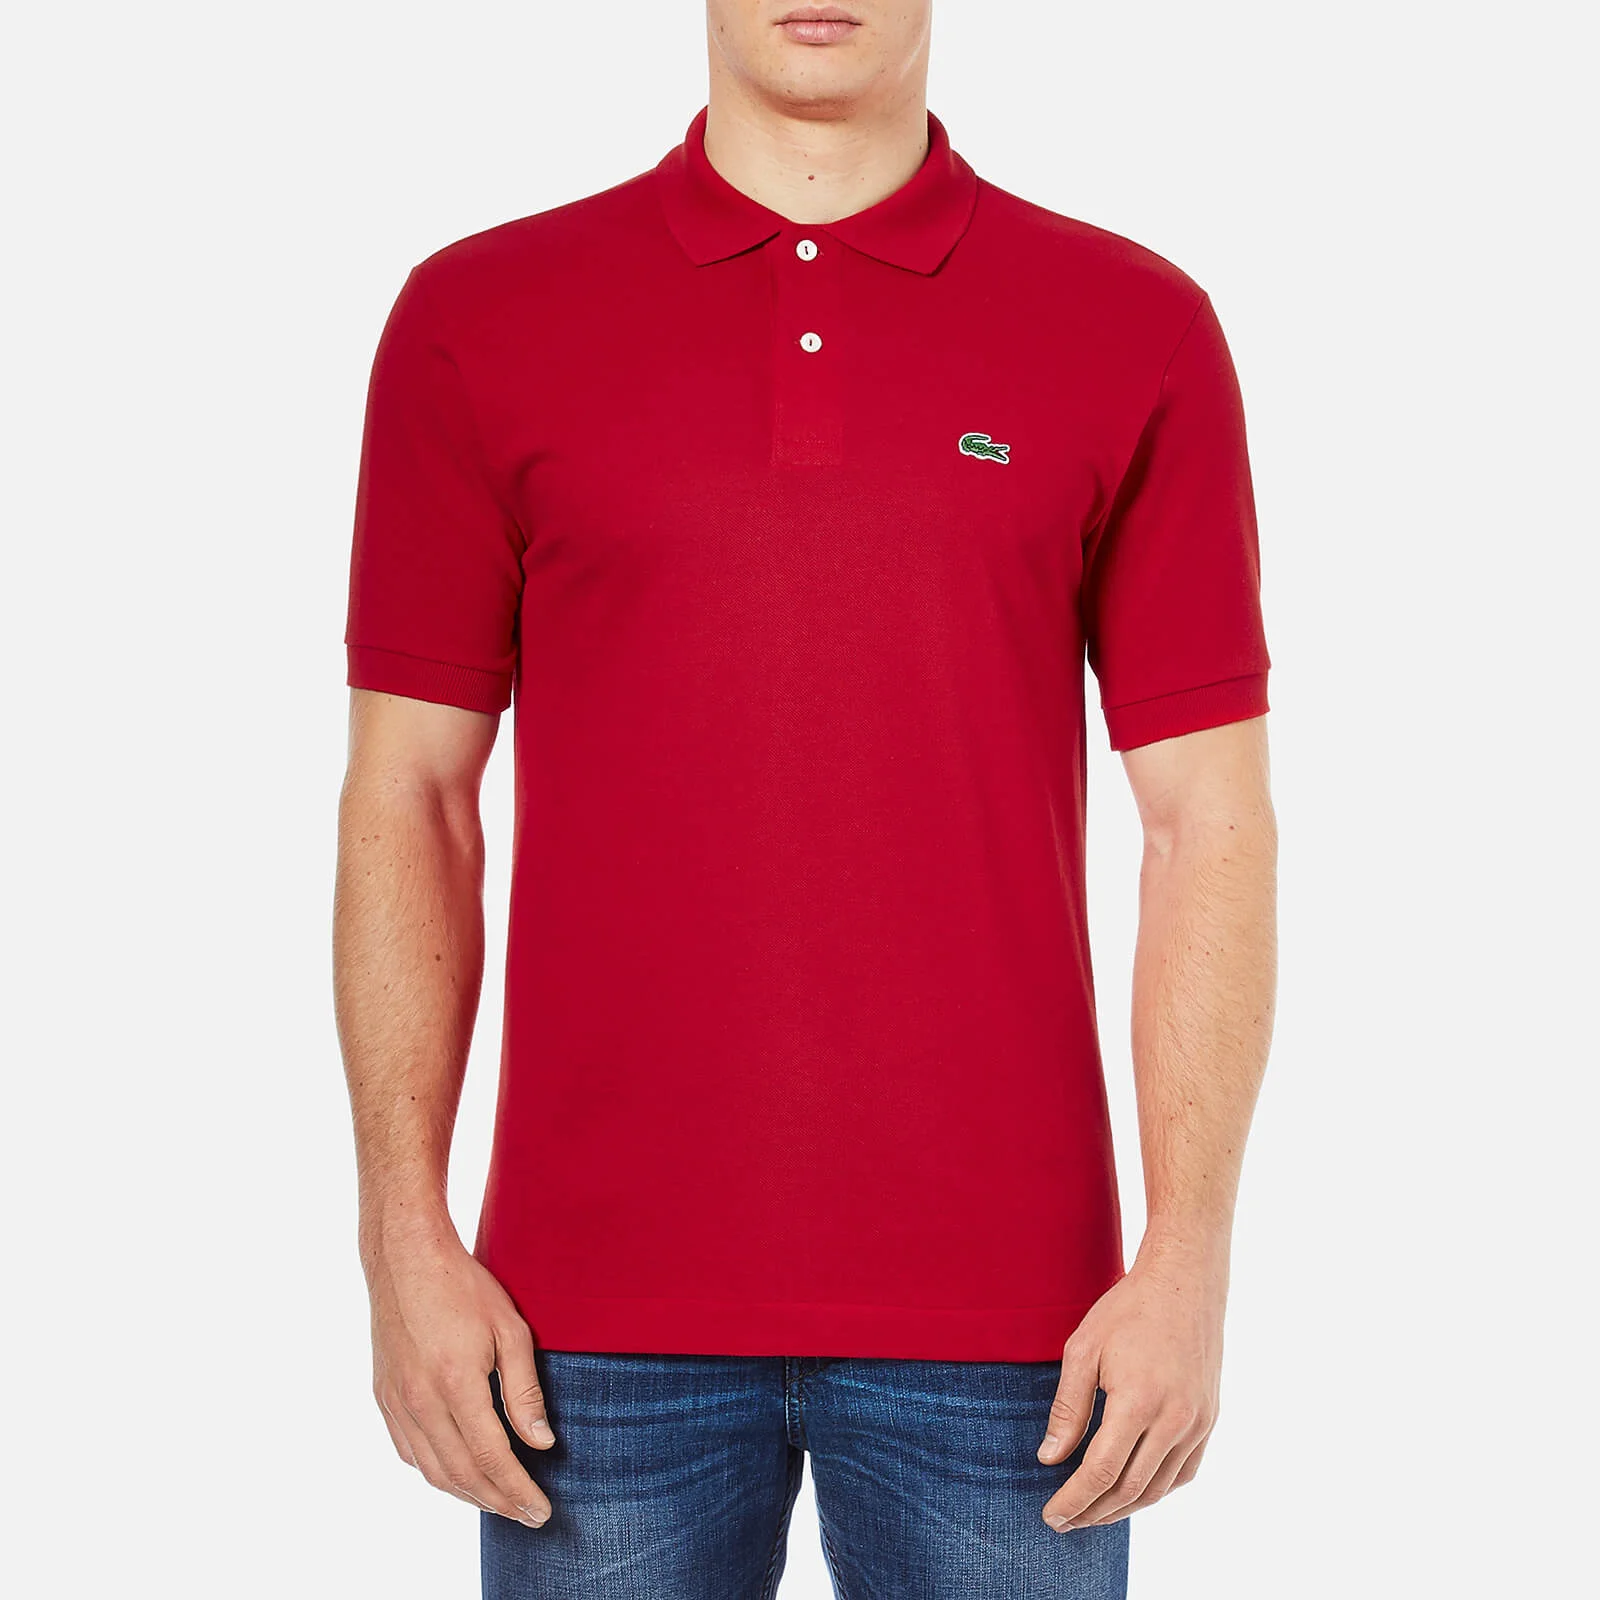 Lacoste Men's Basic Pique Short Sleeve Polo Shirt - Red Image 1